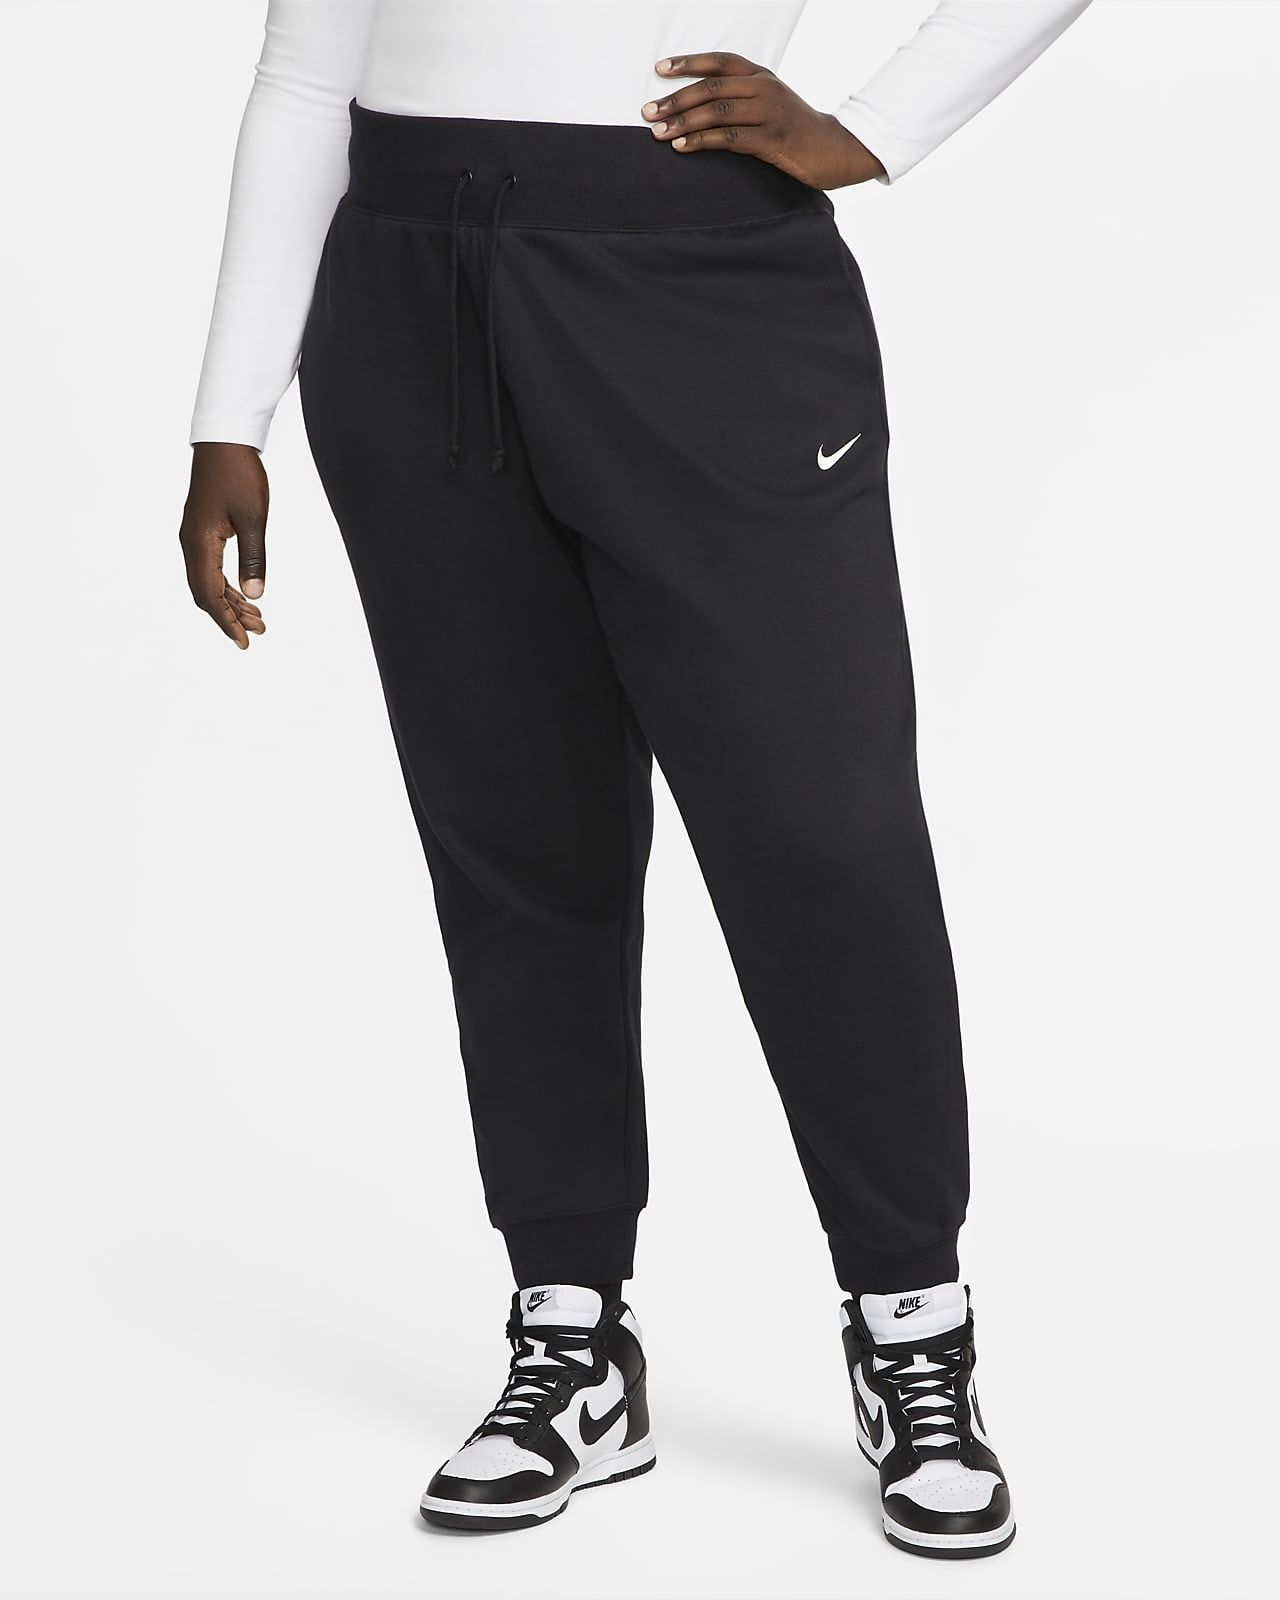 Nike Sportswear Phoenix Fleece Women's High-Waisted Joggers (Plus Size). Nike.com | Nike (US)